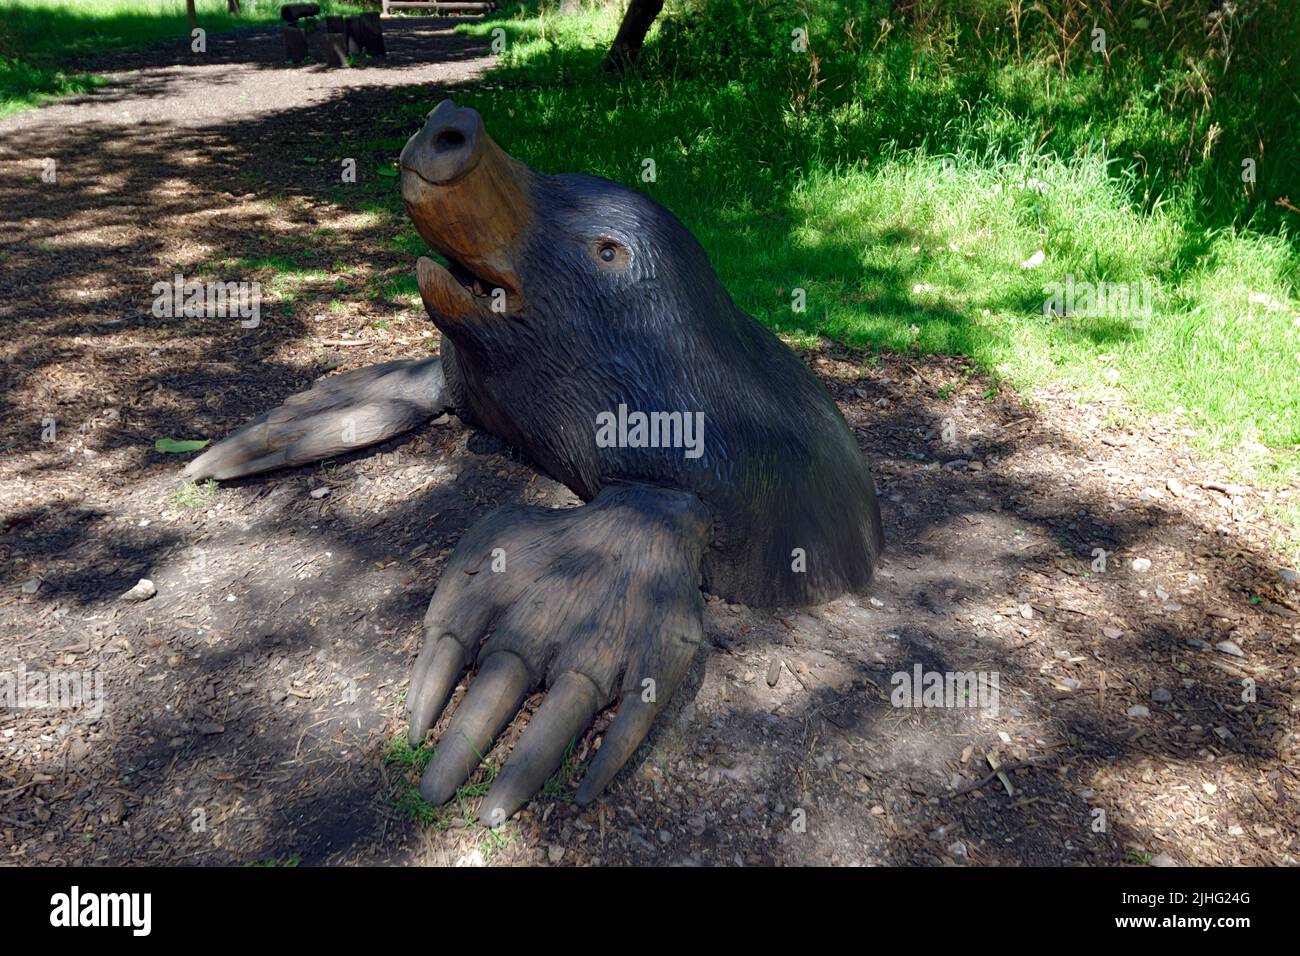 Giant Mole sculpture, Bute Park, Cardiff. Stock Photo